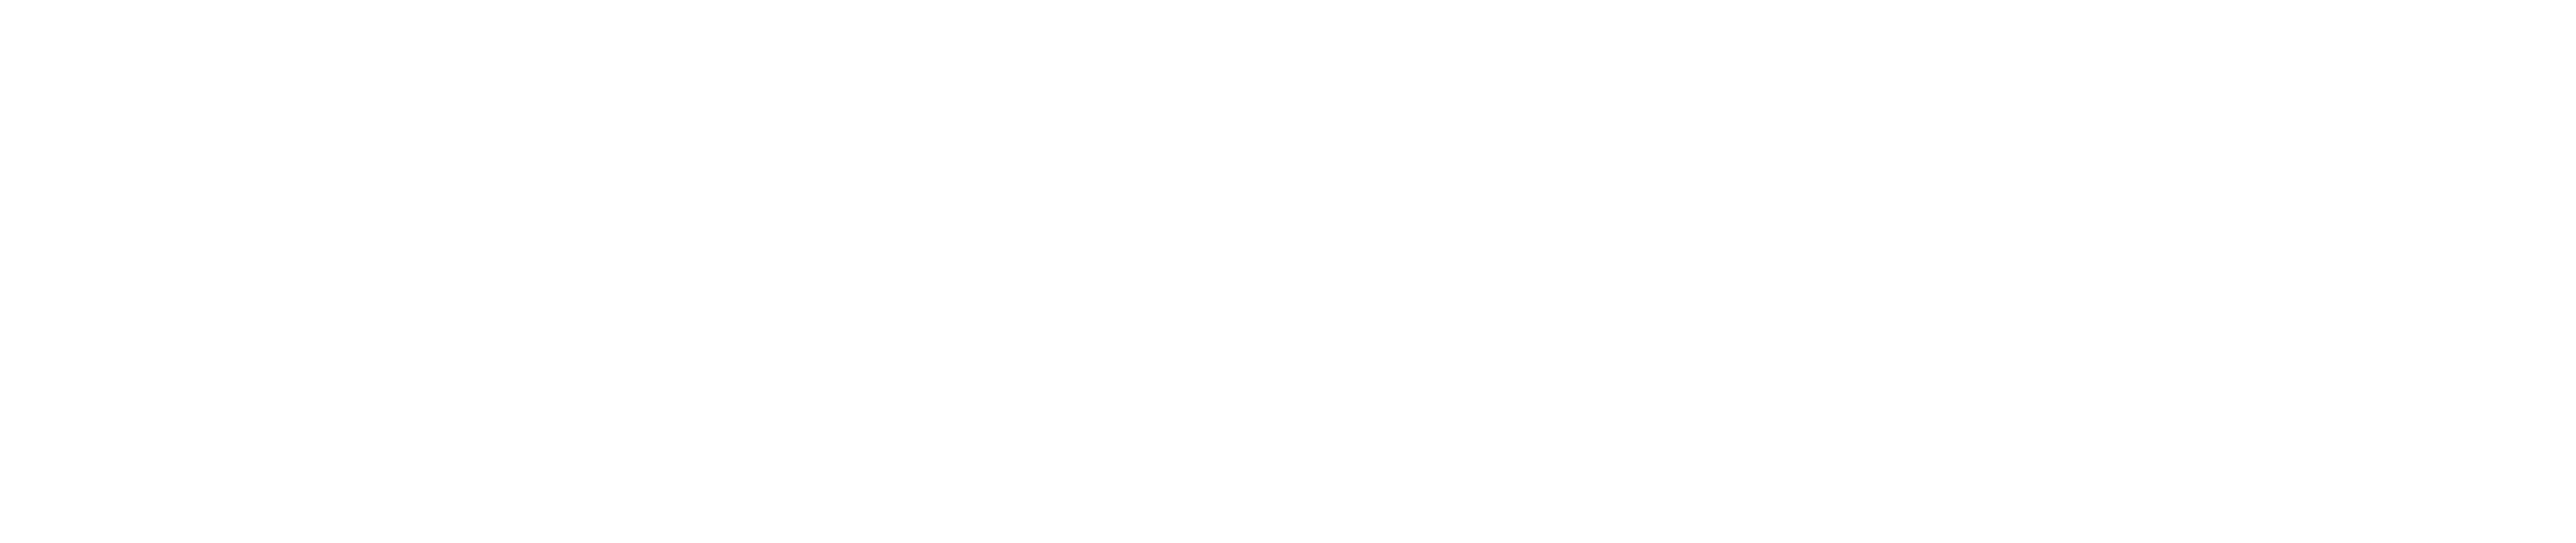 Sanofi White Logo